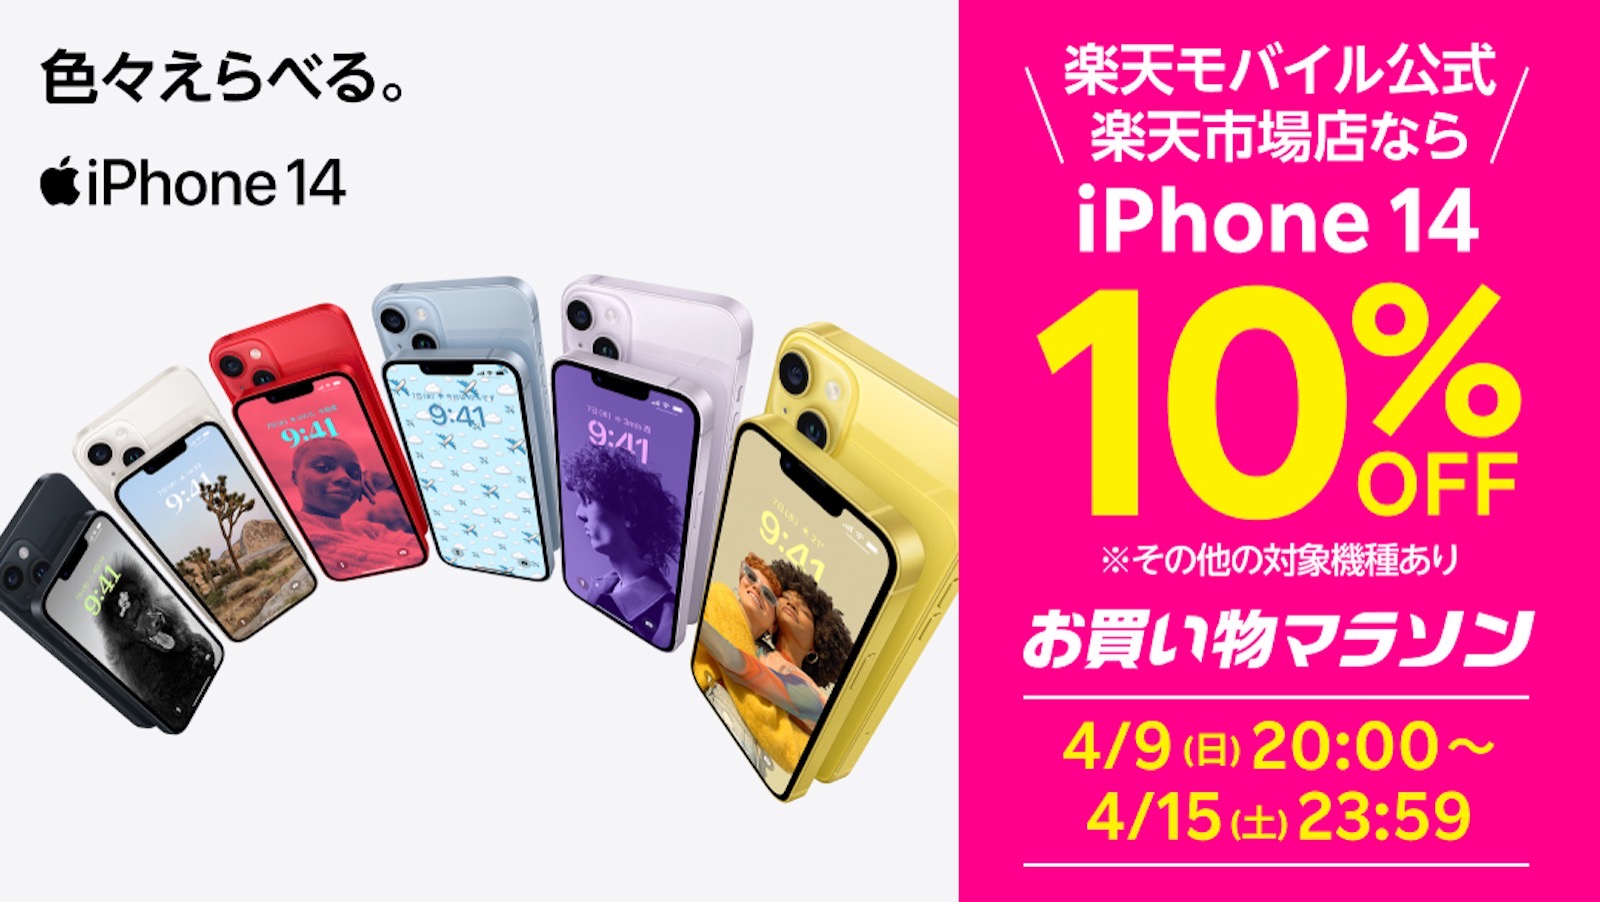 Rakuten Mobile iPhone14 cheap